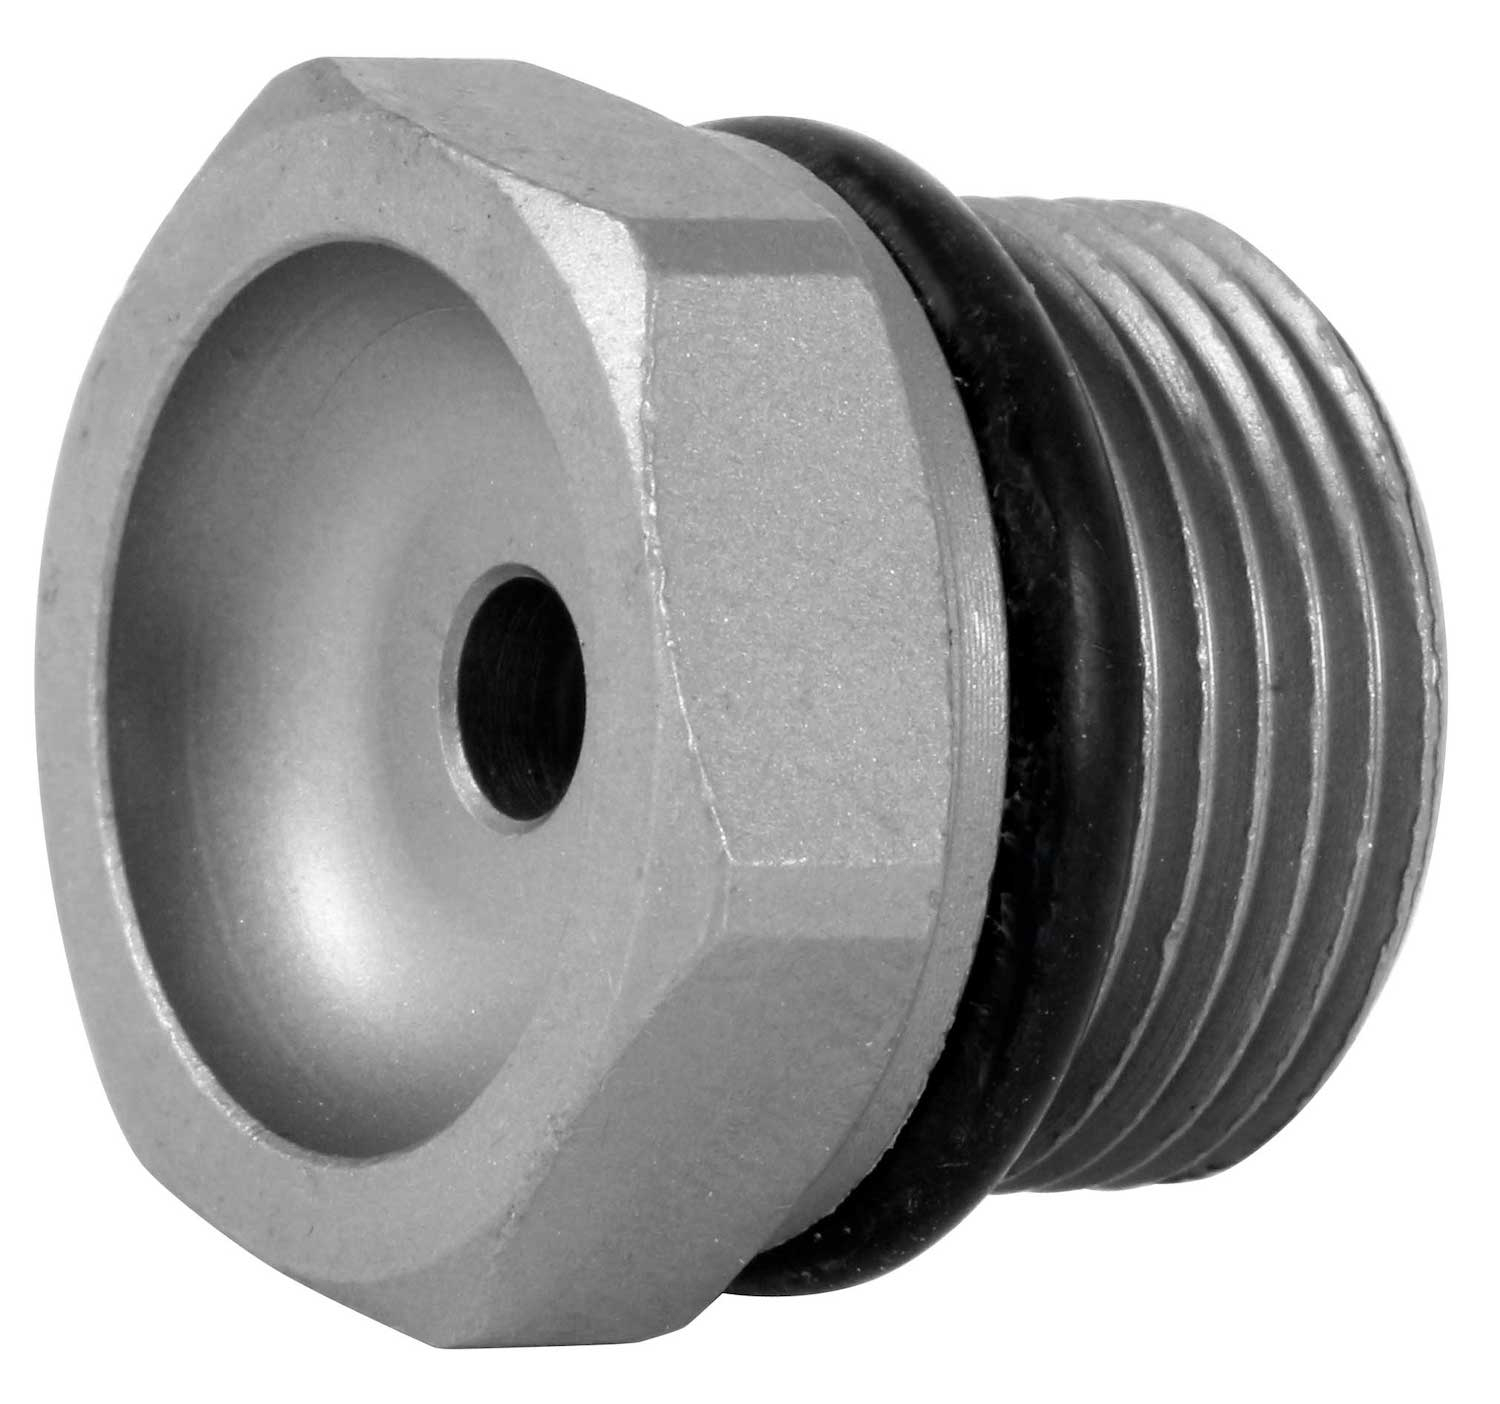 Buse inox pour lance hydro-balayage - calibre 3,5 mm